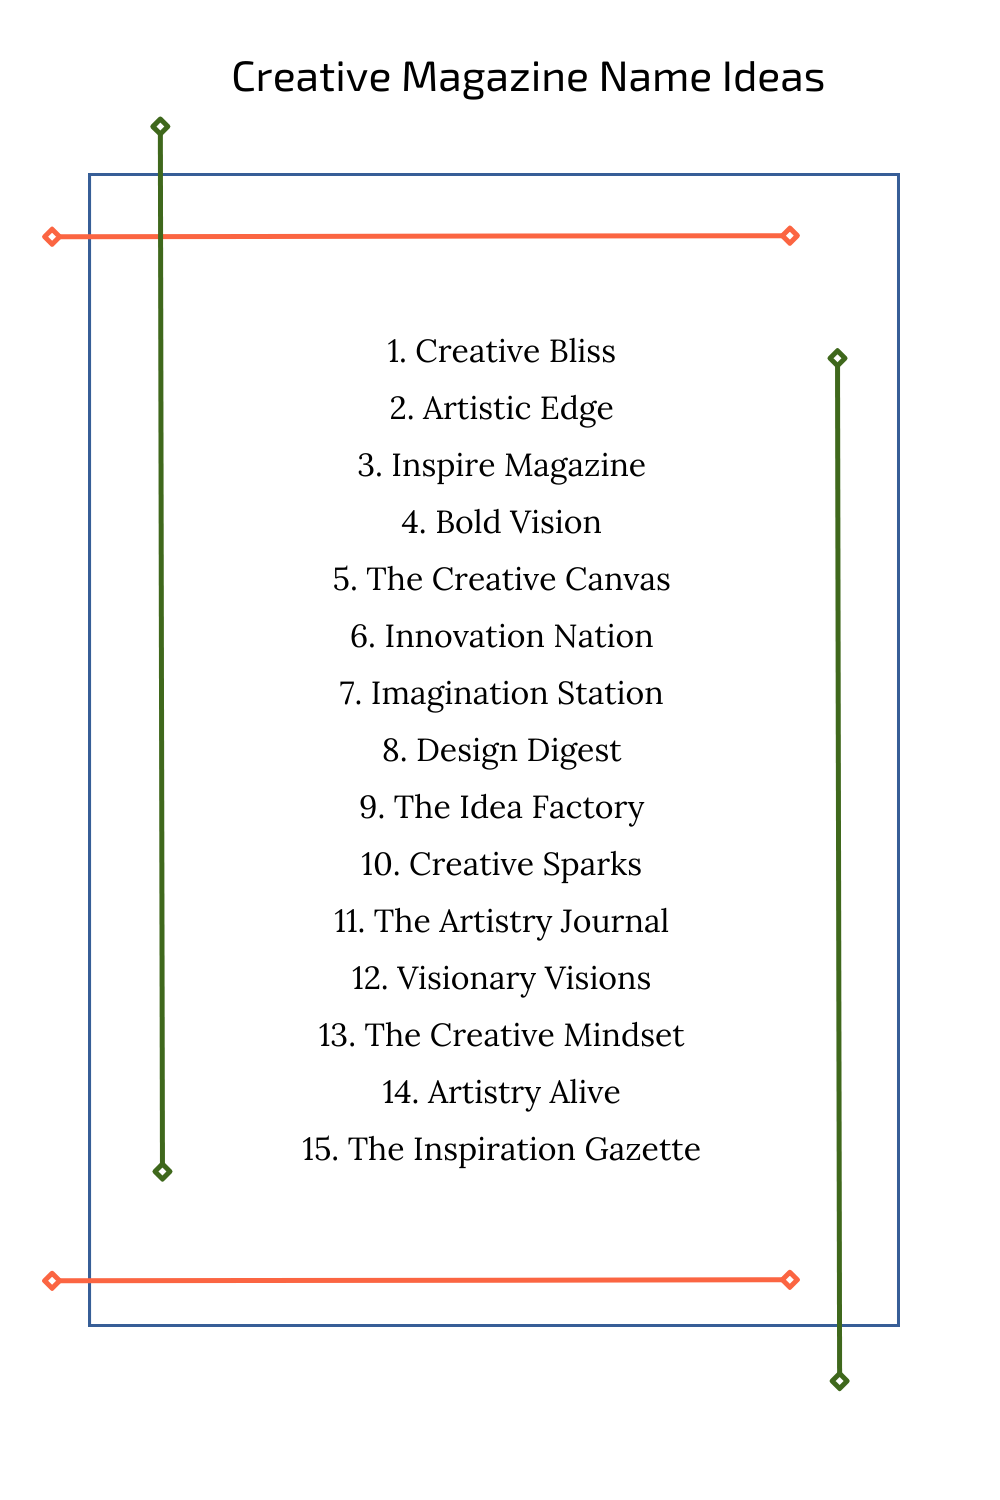 Creative Magazine Name Ideas